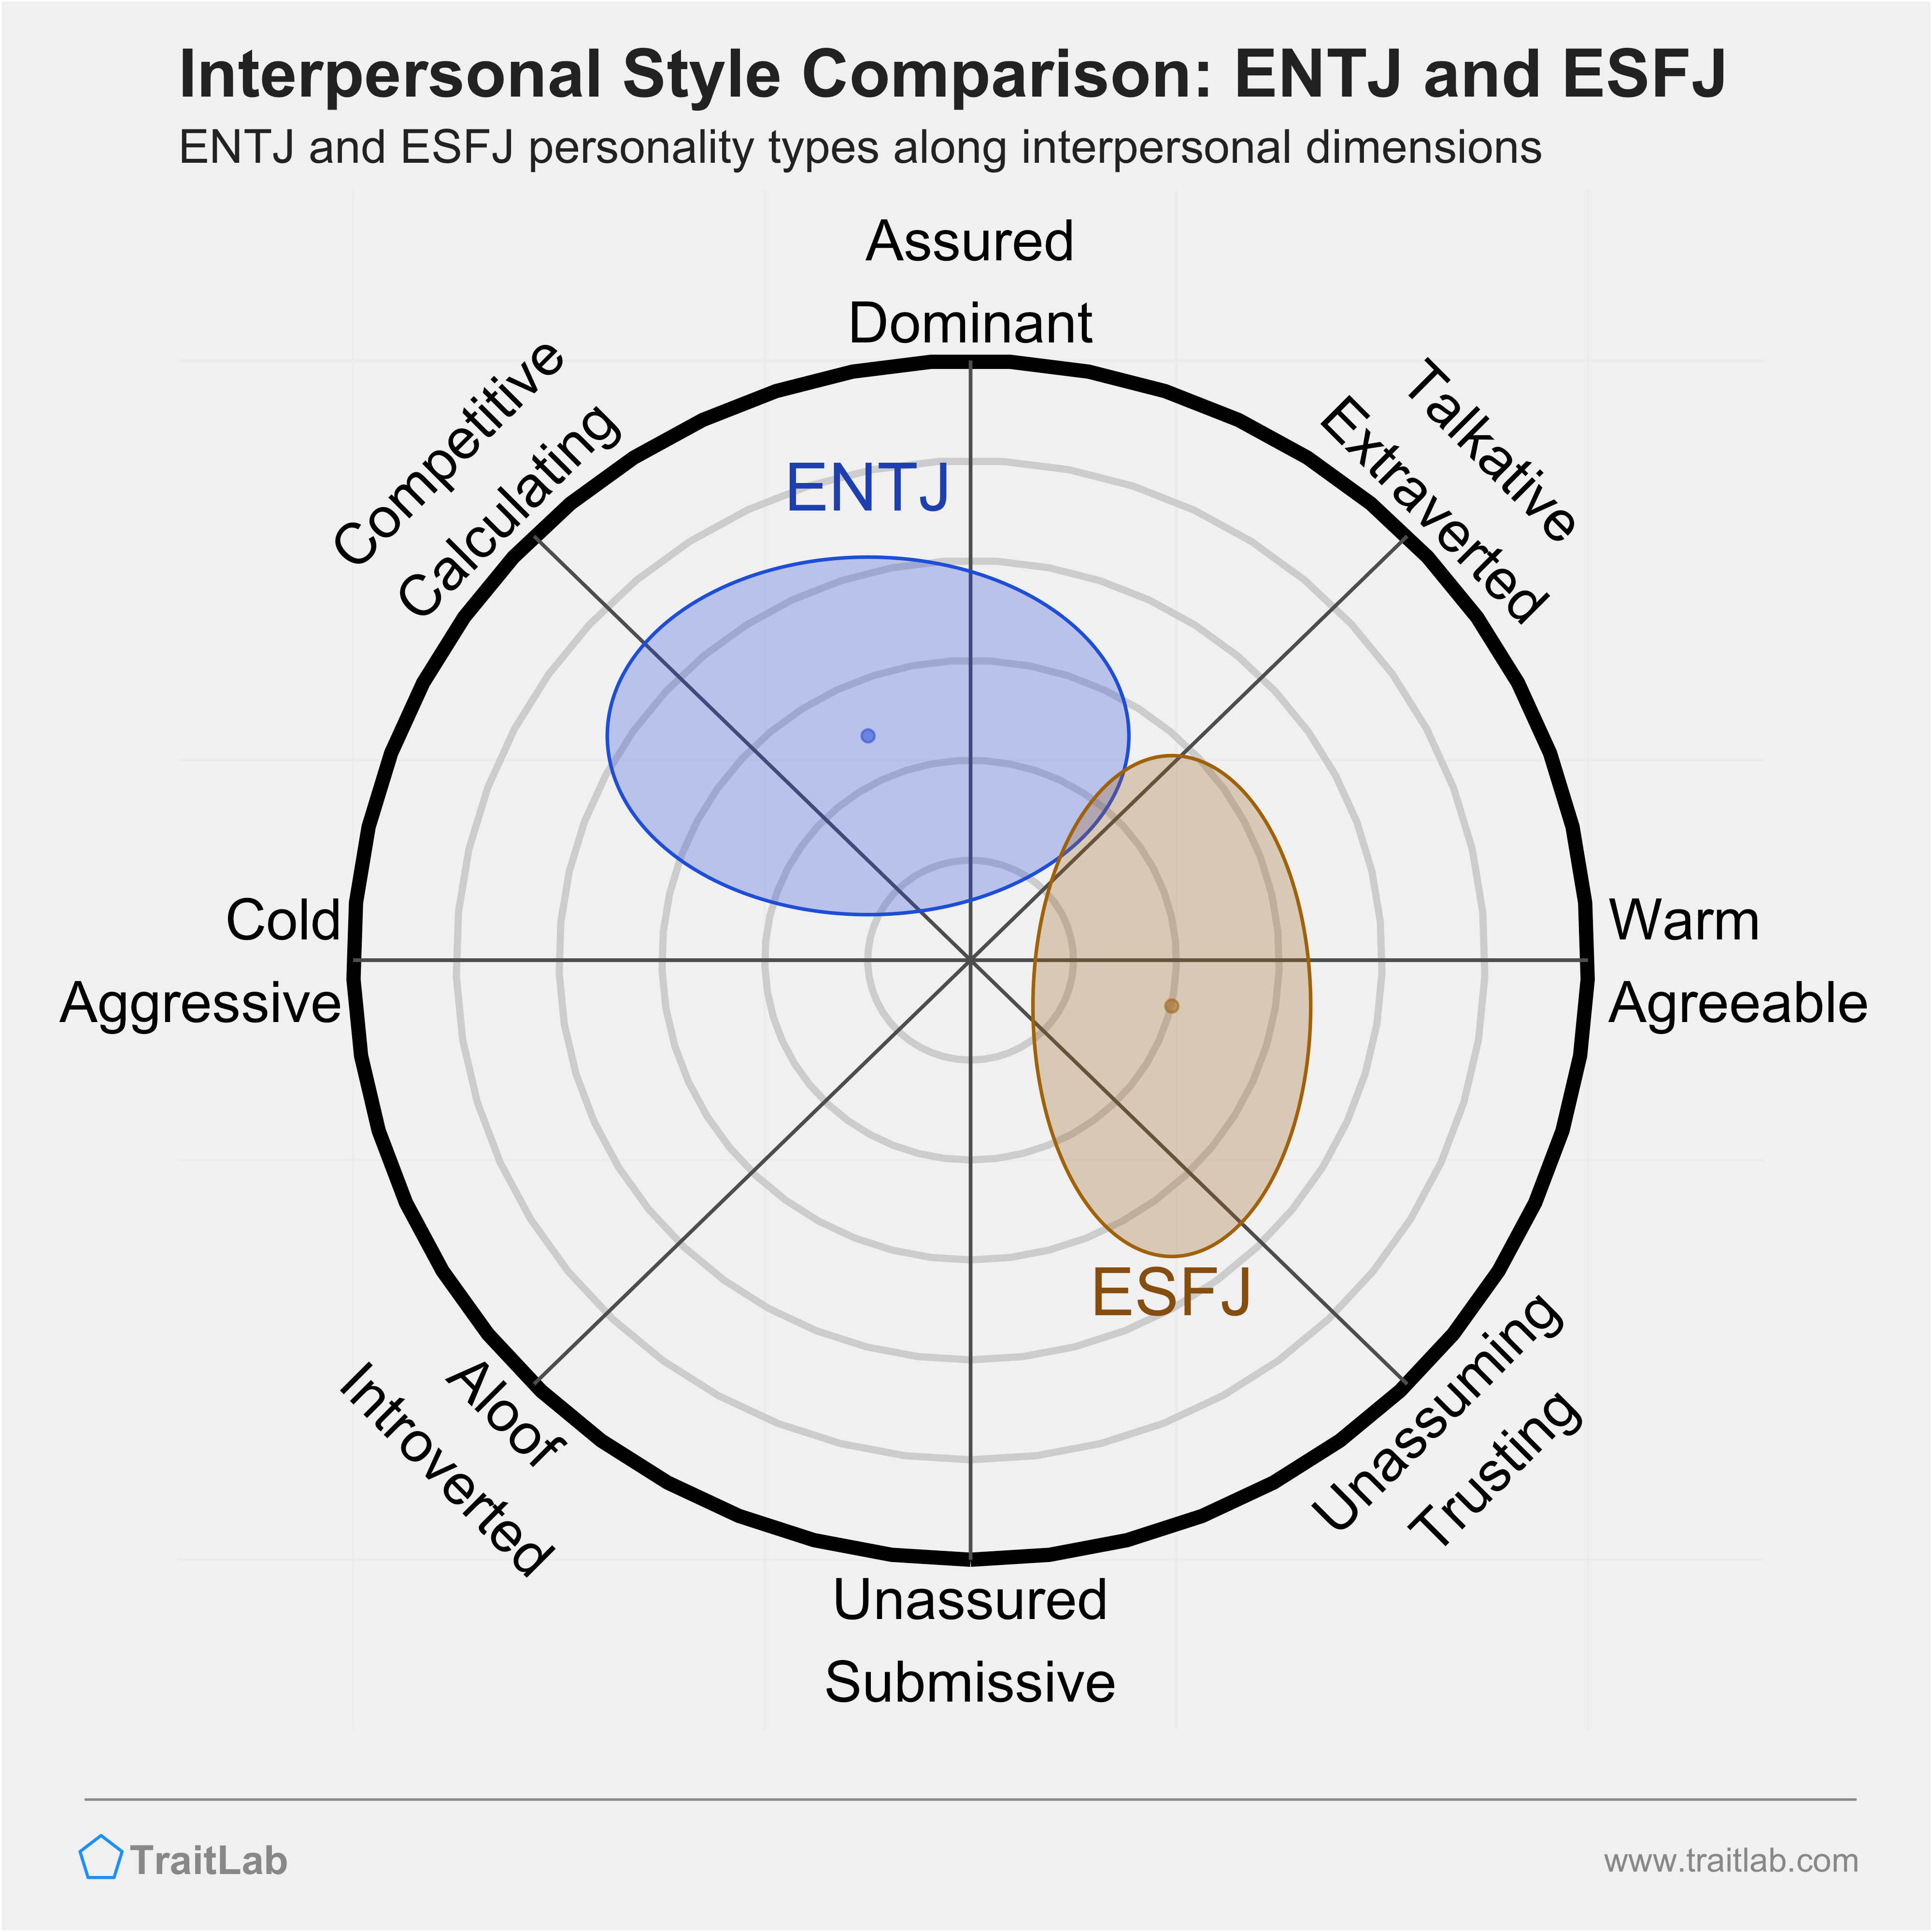 ENTJ and ESFJ comparison across interpersonal dimensions